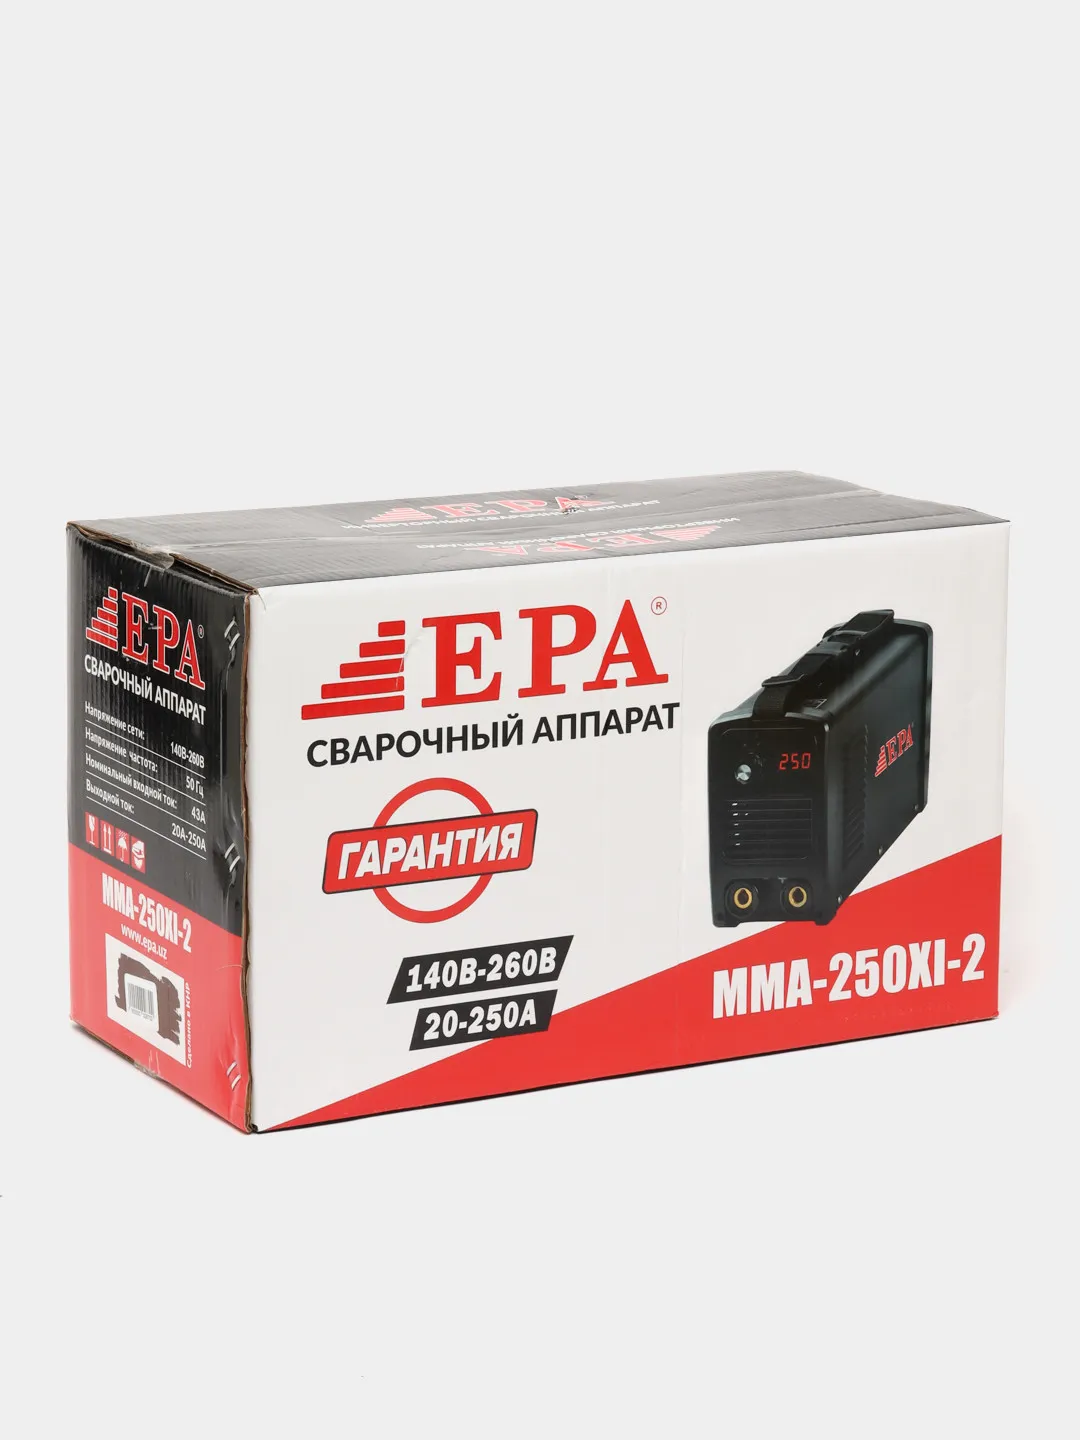 Сварочный аппарат EPA MMA-250XI-2#2